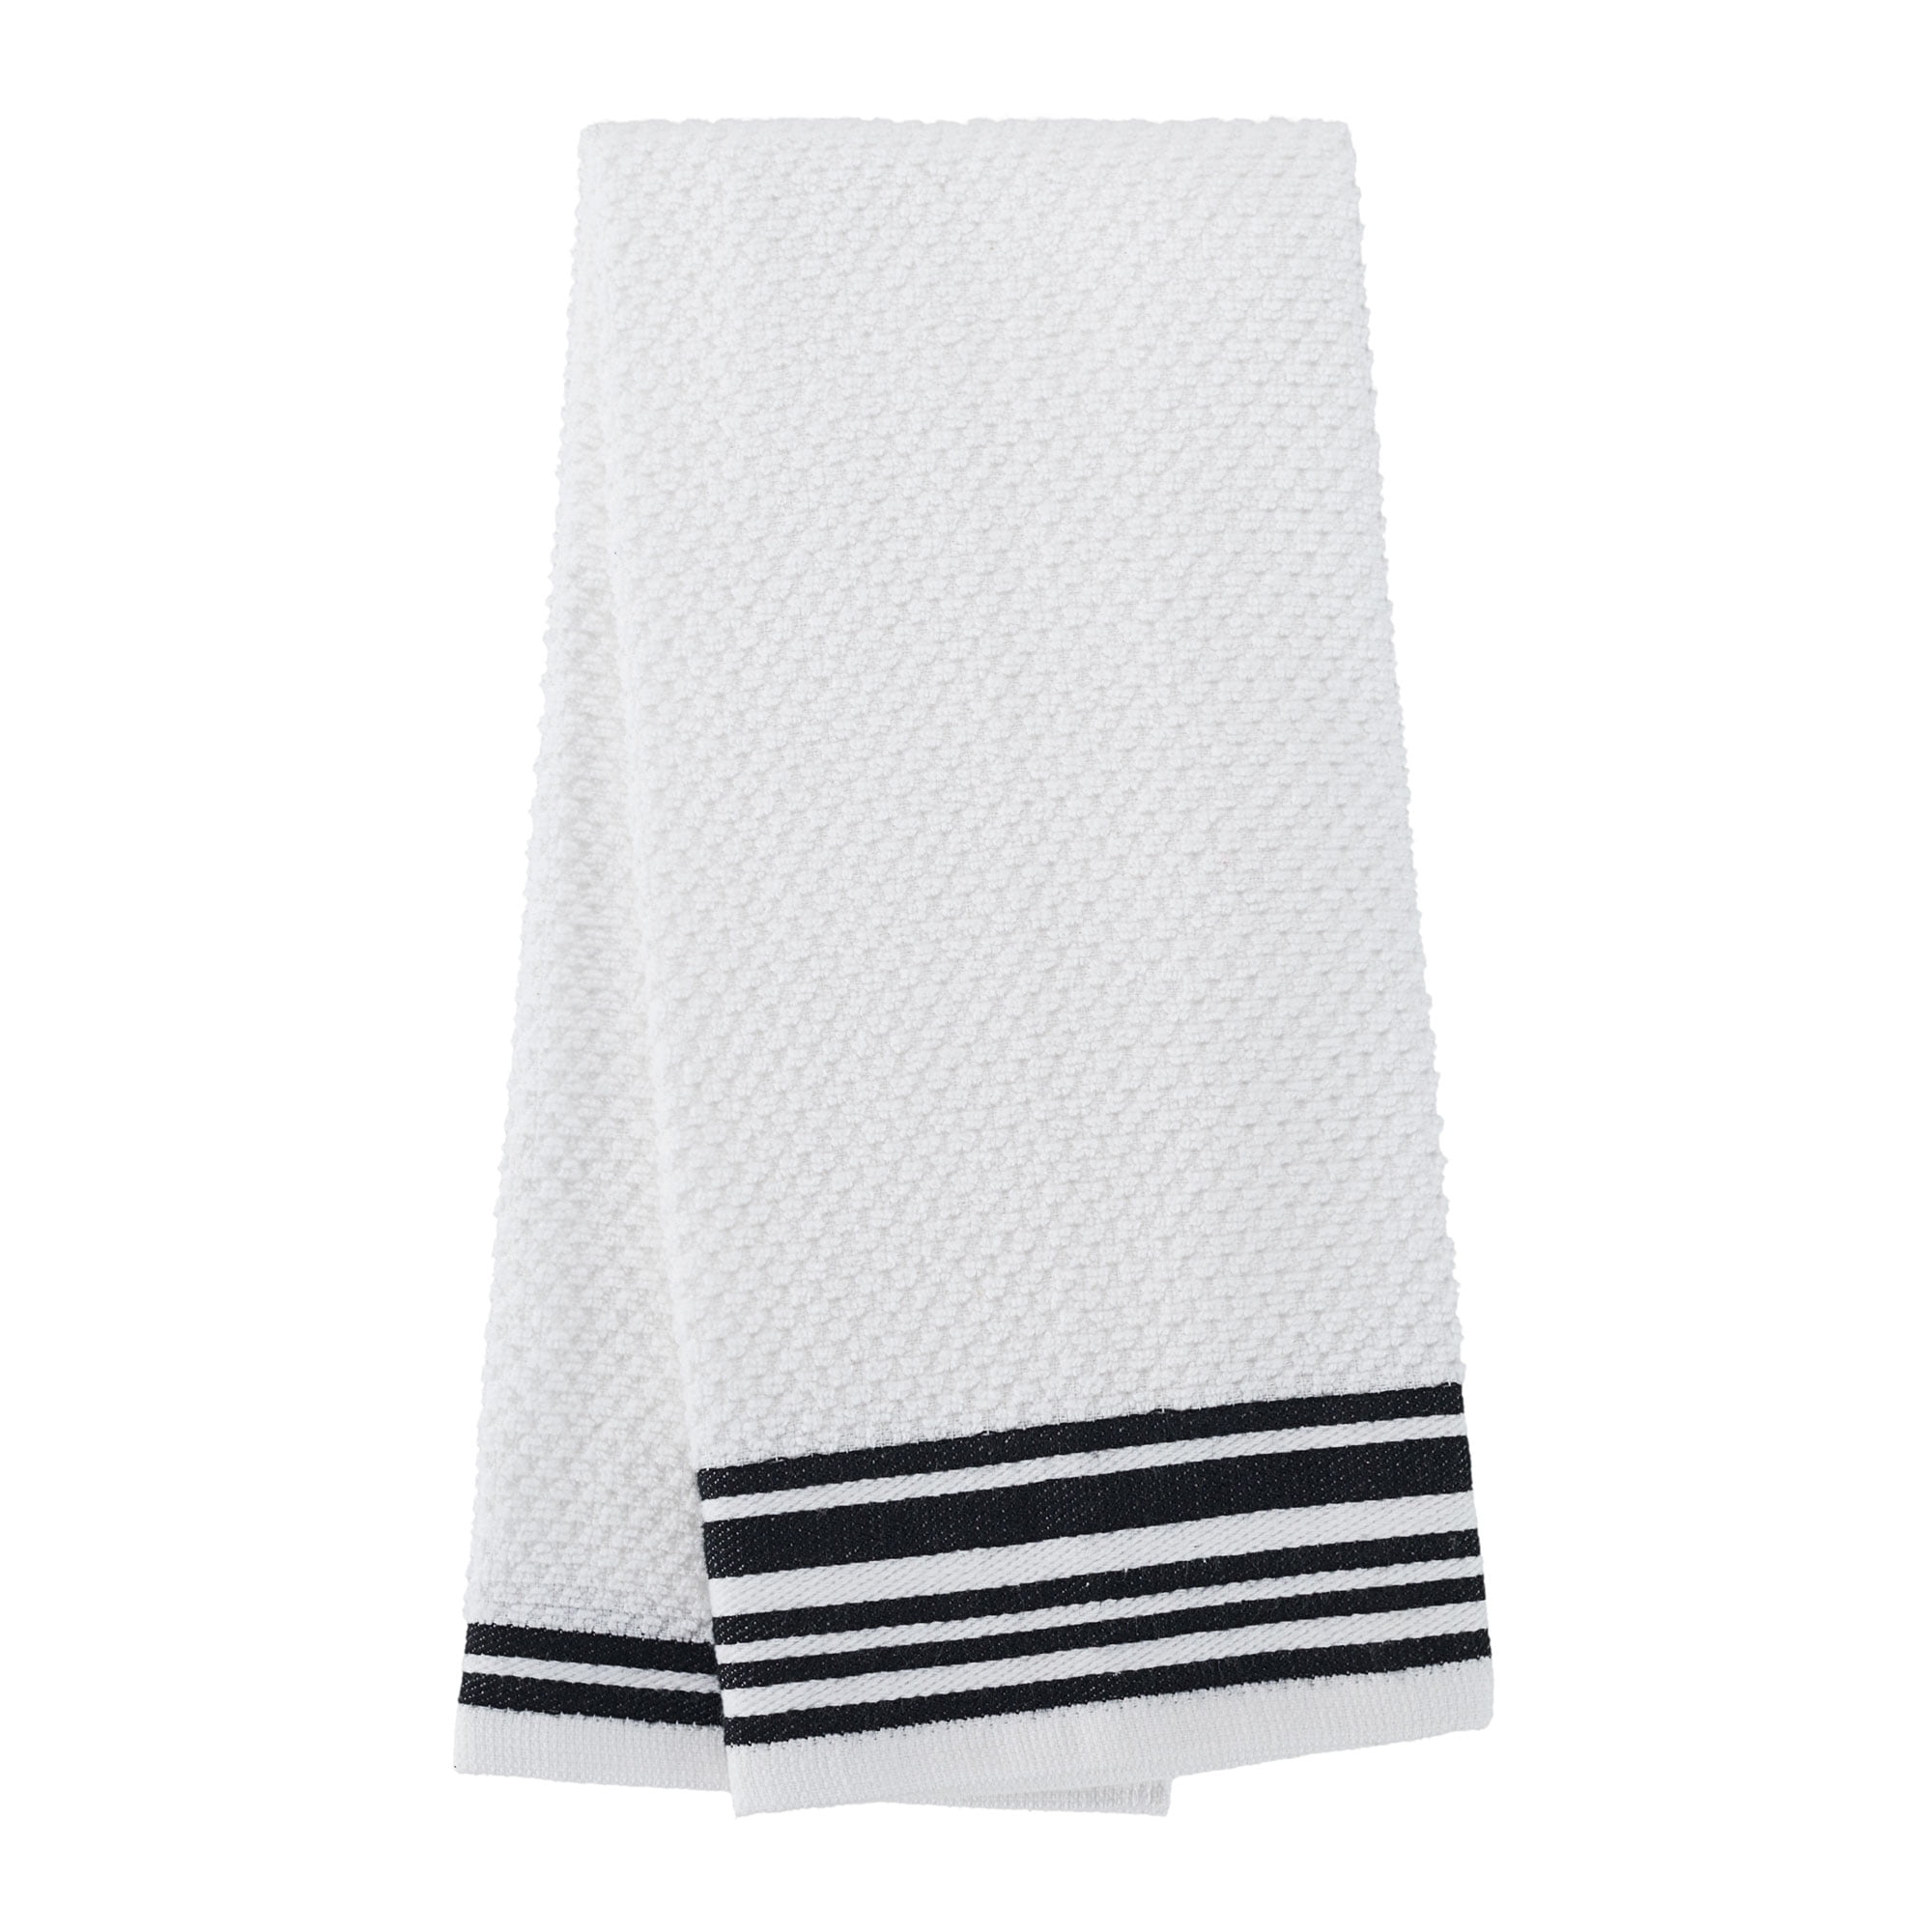 Kitchen Towel With Black Stripes on Natural Color, Bread Towel, Drying Towel,  Tea Towel, Rv, Caravan Towel, Hand Towel 